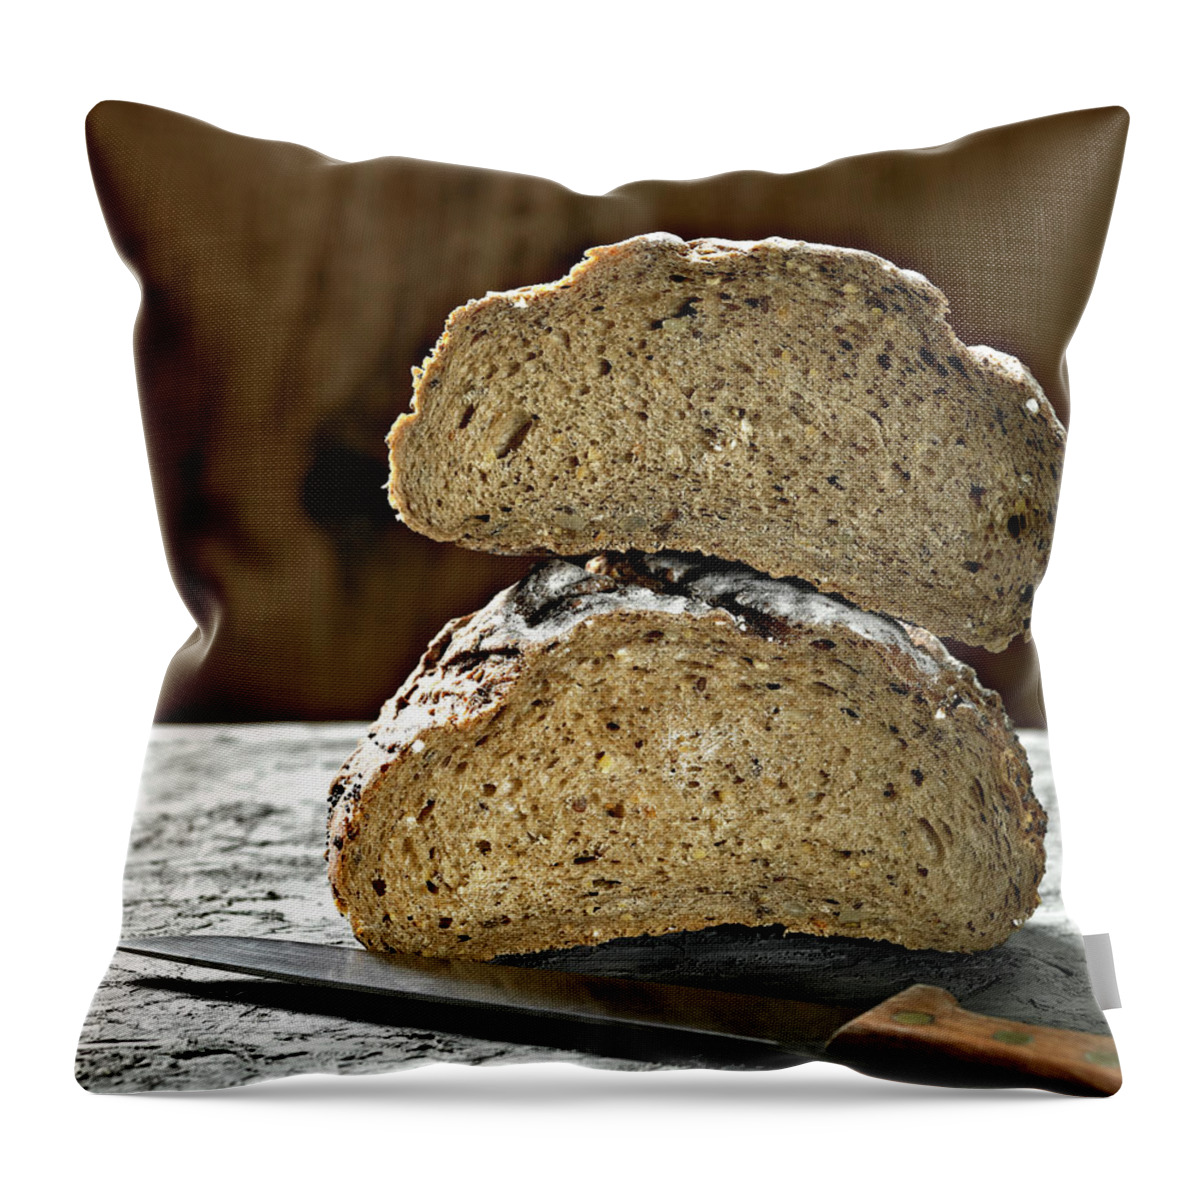 Greek Culture Throw Pillow featuring the photograph Bread by Maria Toutoudaki